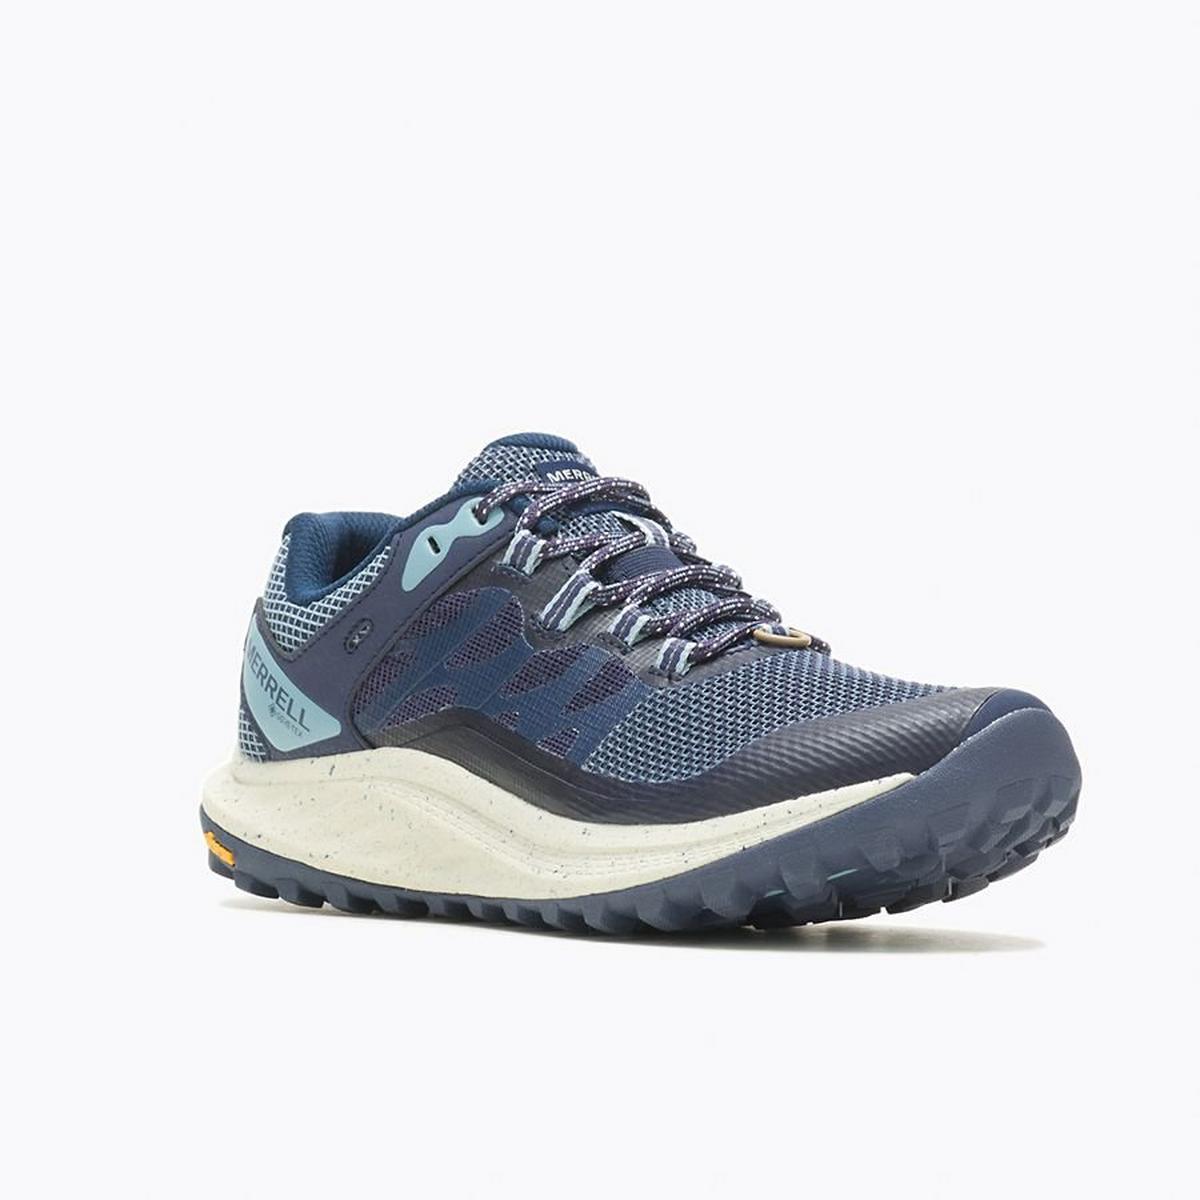 Merrell Women's Antora 3 GORE-TEX Trail Running Shoes - Sea Blue